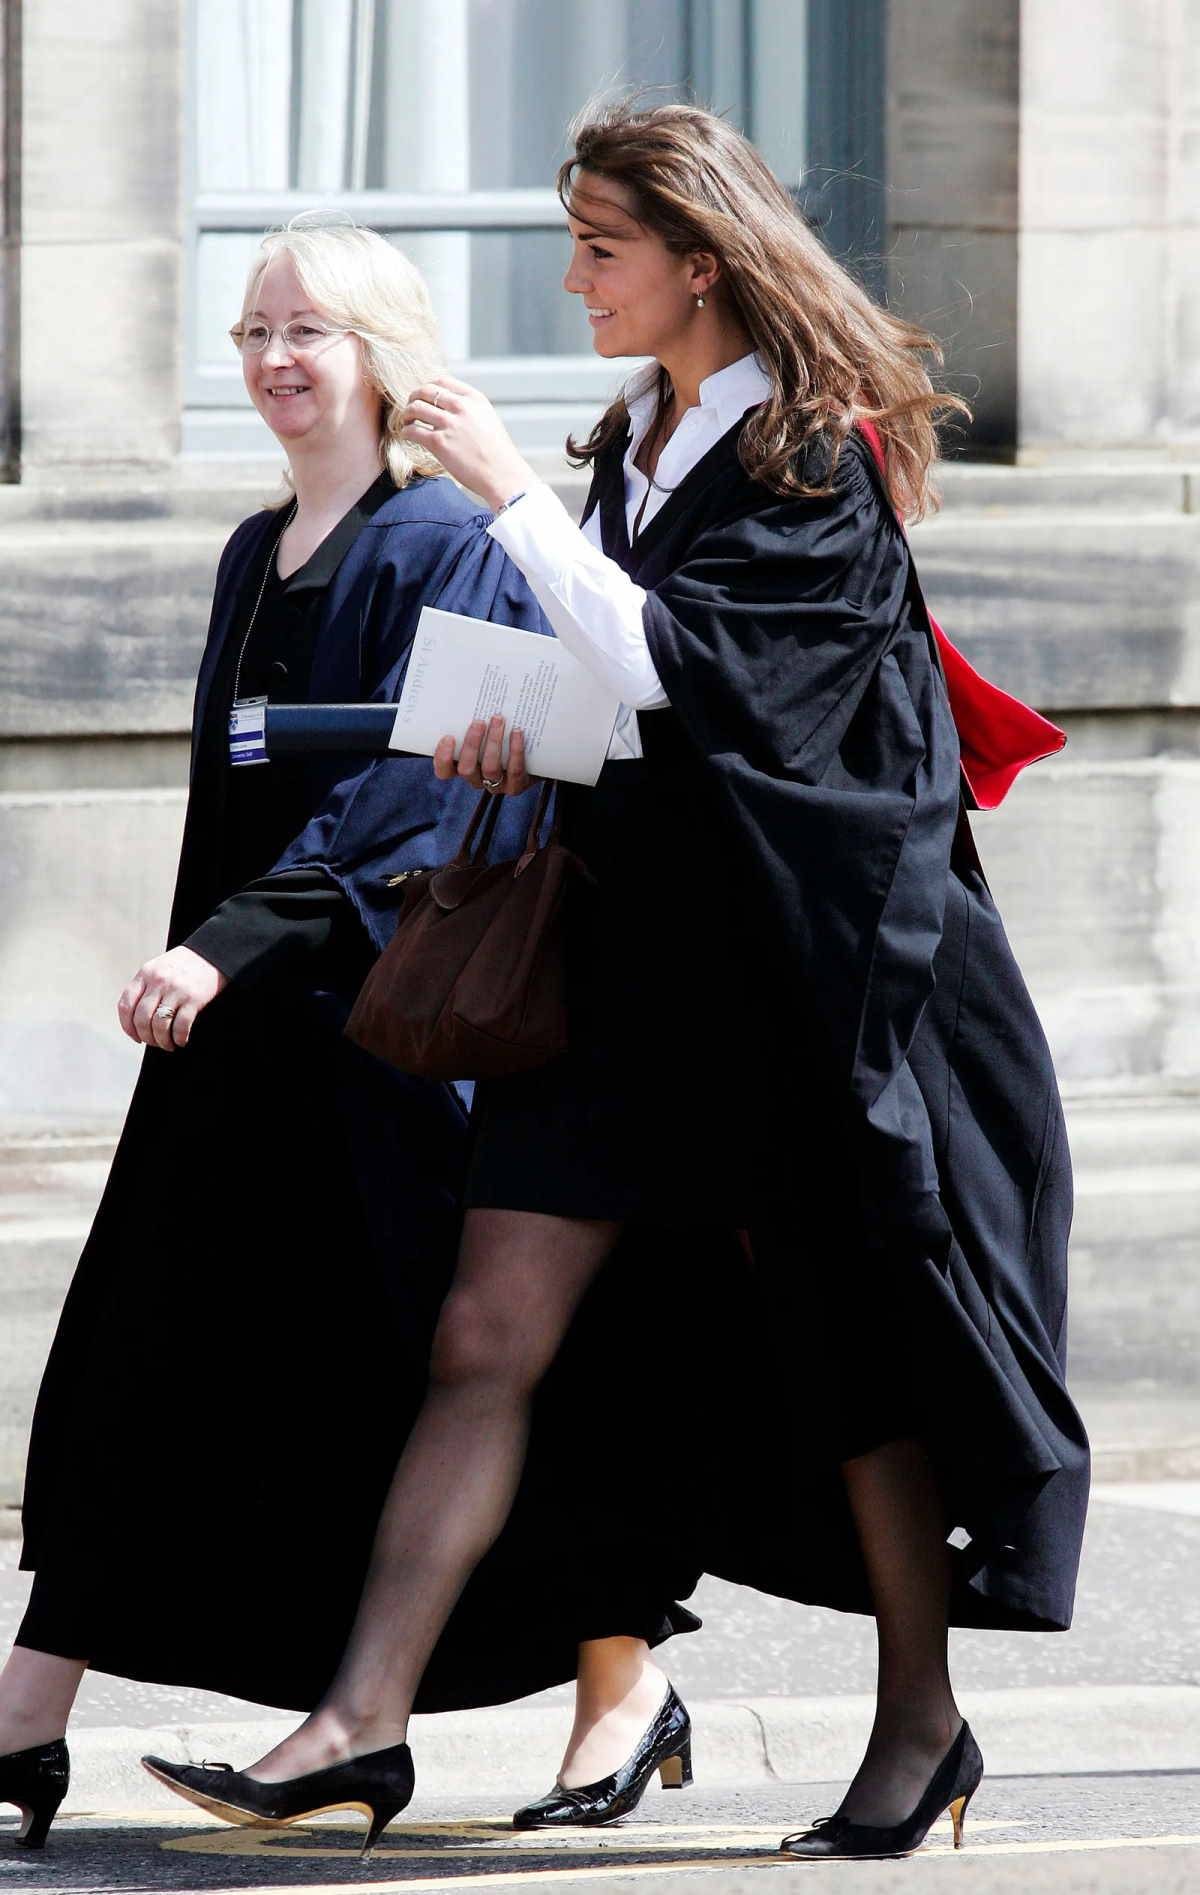 Księżna Kate nosi cienkie rajstopy do czółenek. Księżna Kate od lat 2000. nosi transparentne rajstopy i pokazuje, jak dobrać rajstopy w kolorze cielistym i czarne rajstopy do klasycznych czółenek.